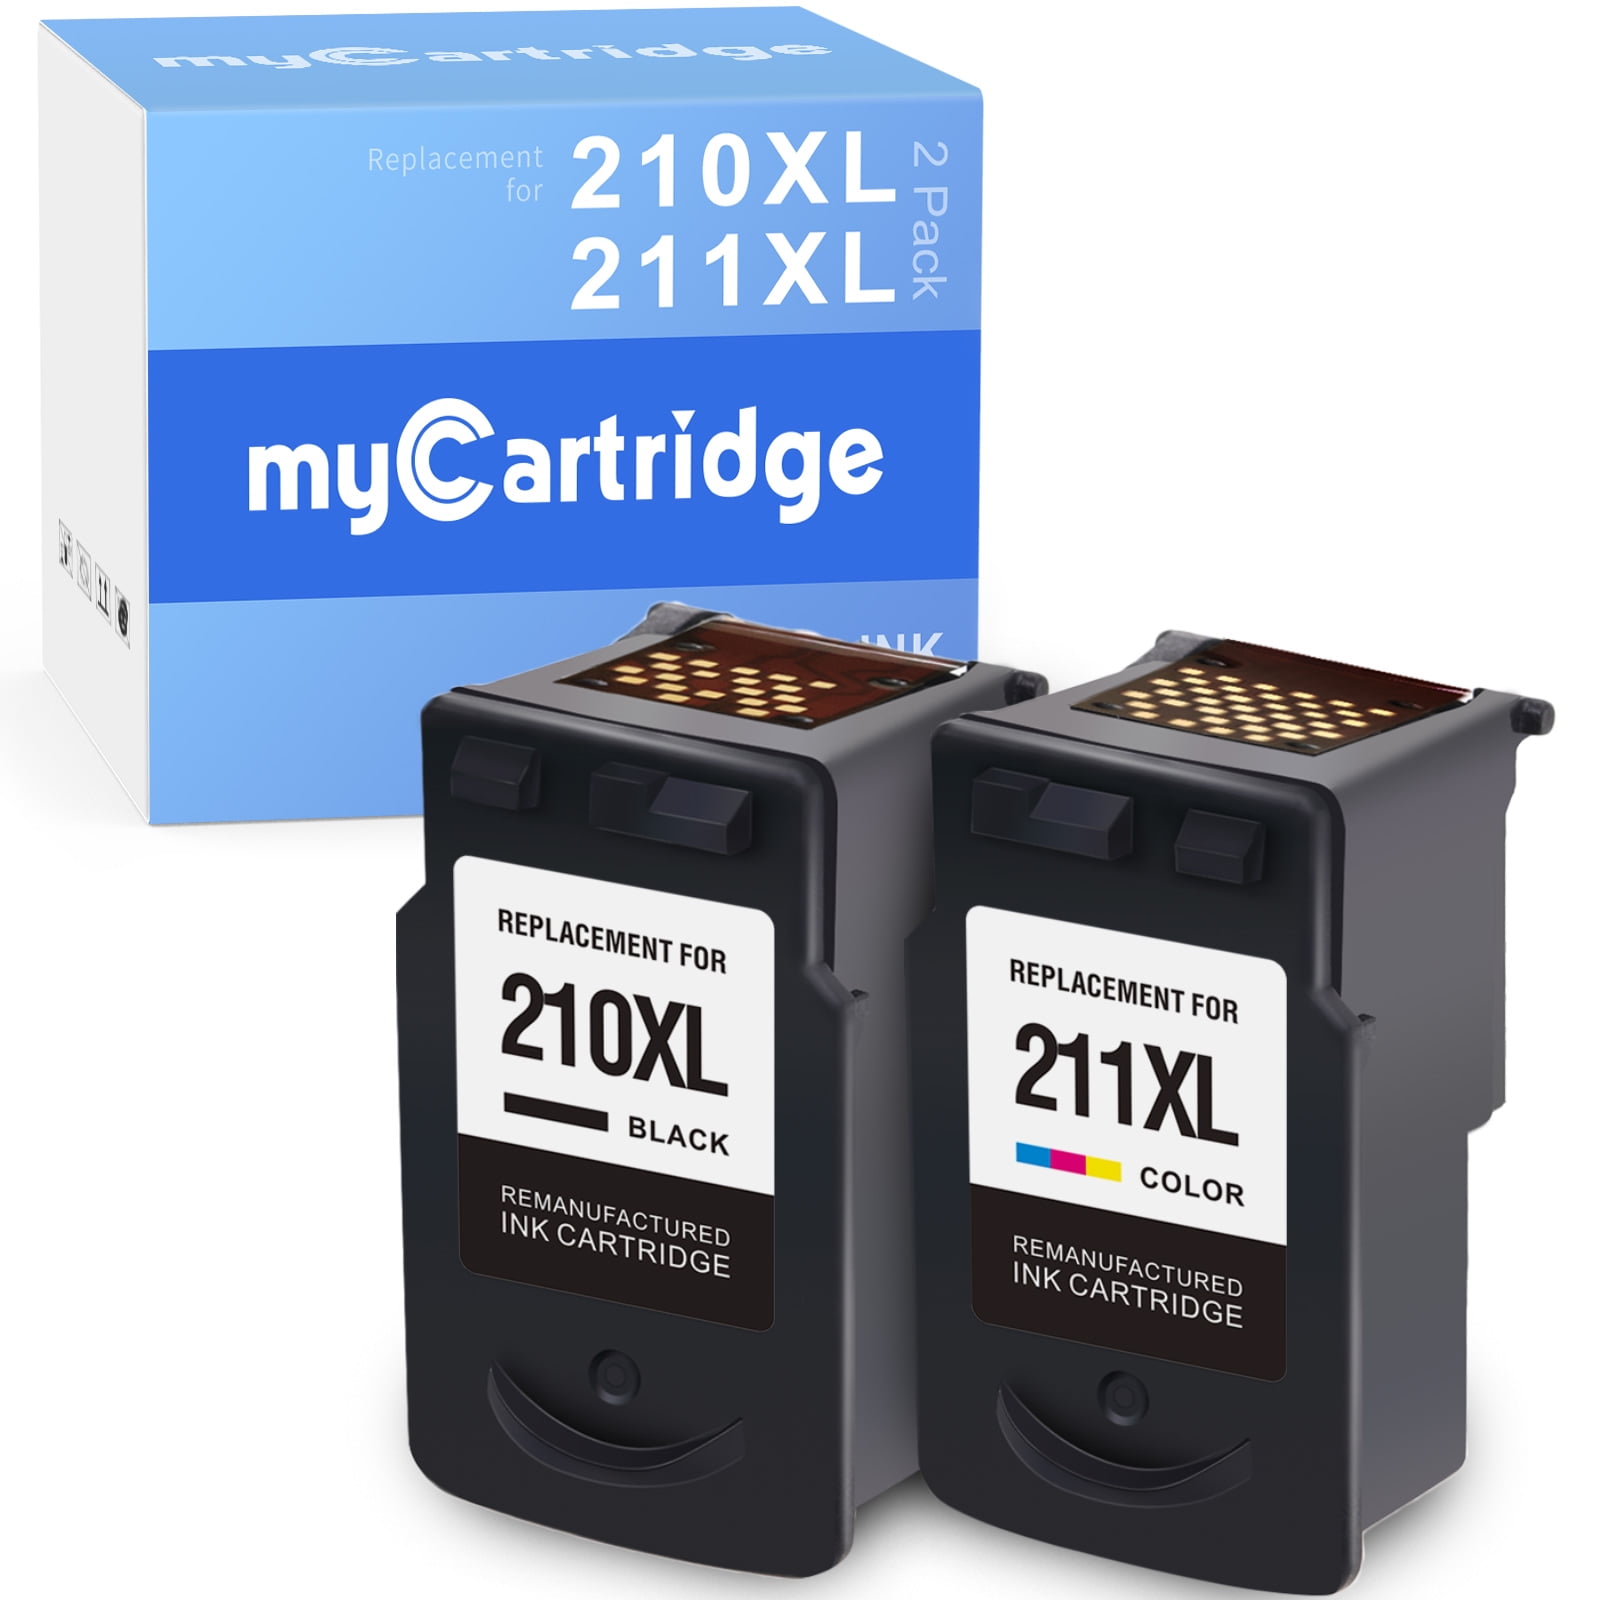 210XL 211XL Ink Cartridge for 210XL 211XL 210 XL 211 XL PG-210XL CL-211XL Ink Cartridges for Pixma MP240 MX410 MP490 MP280 MP250 IP2700 IP2702 Printer(1 Black, 1 Tri-Color) Walmart.com